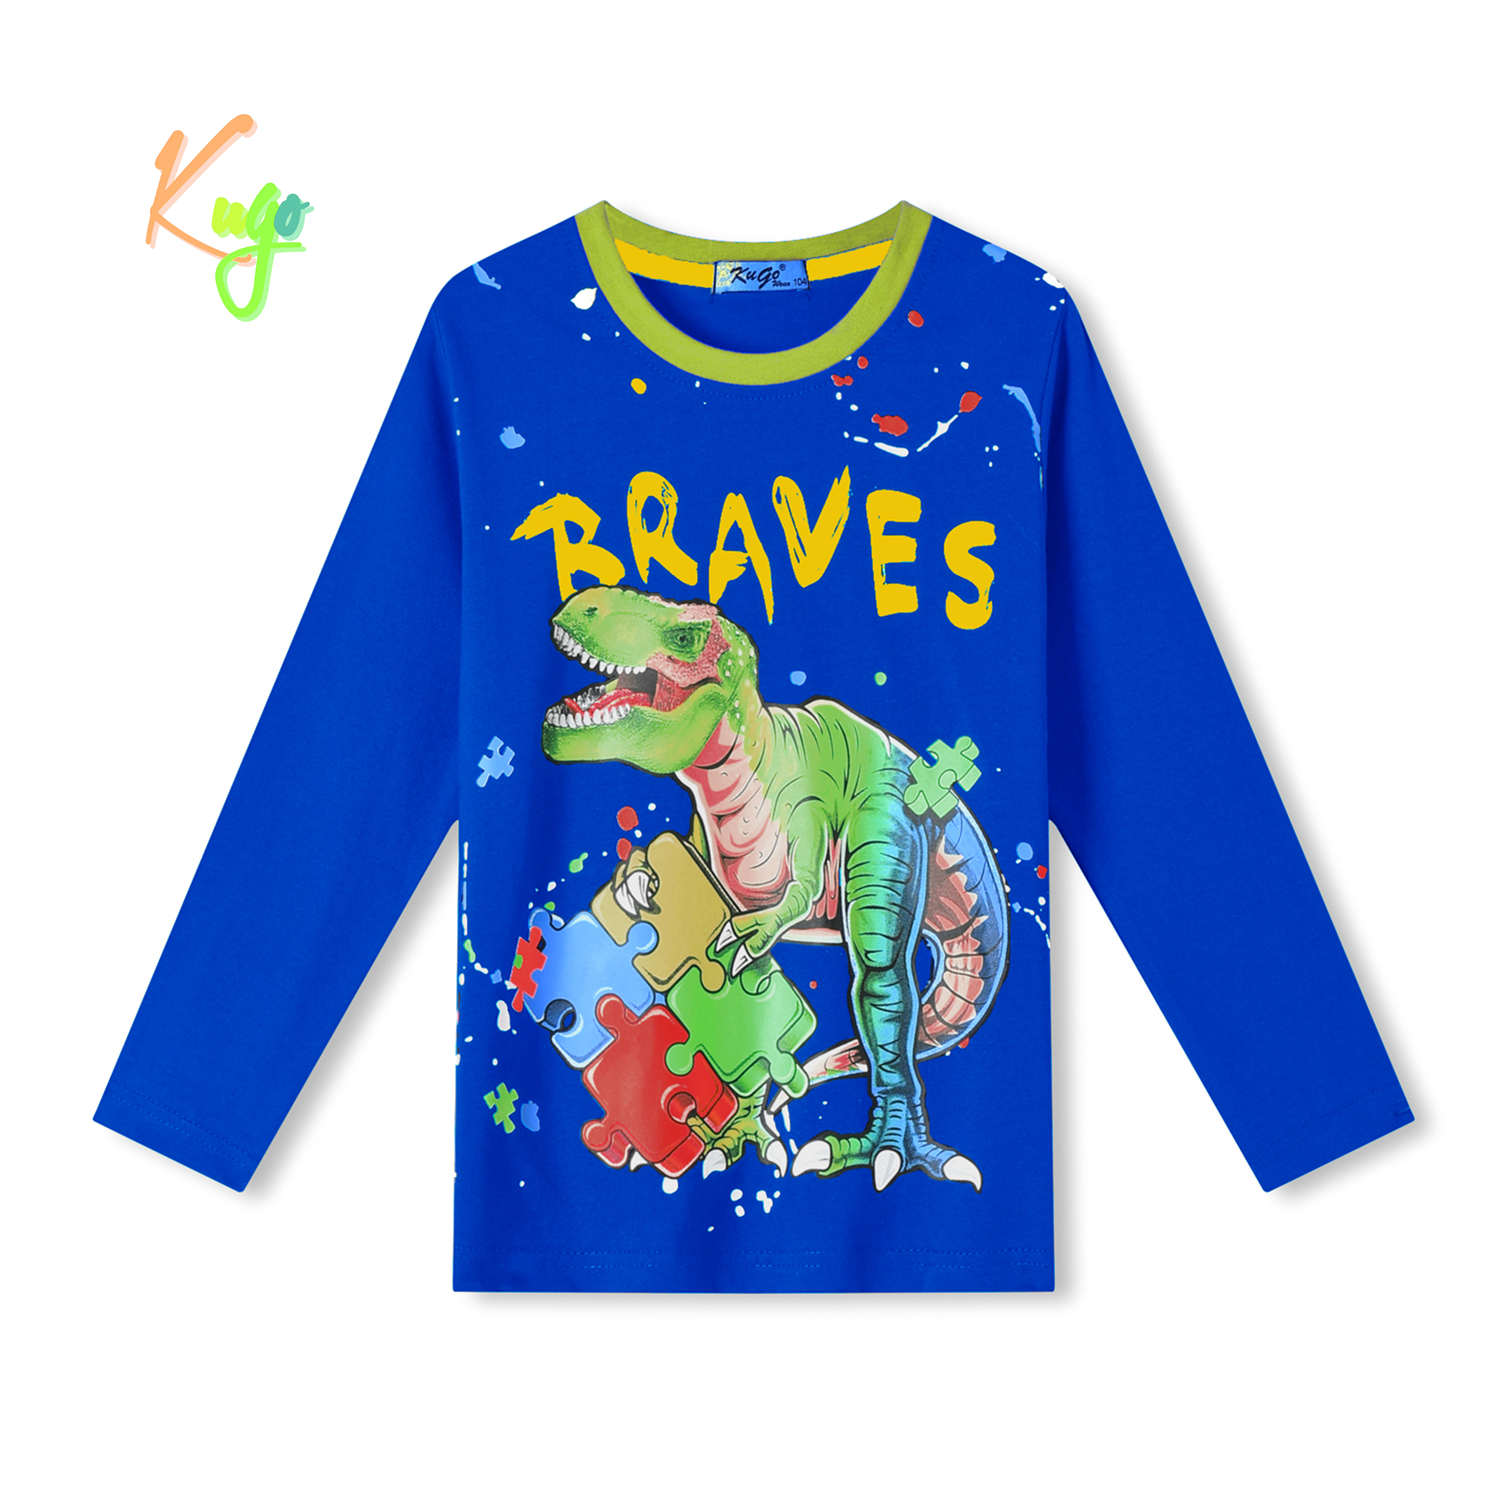 Chlapecké tričko - KUGO HC0756, modrá Barva: Modrá, Velikost: 116